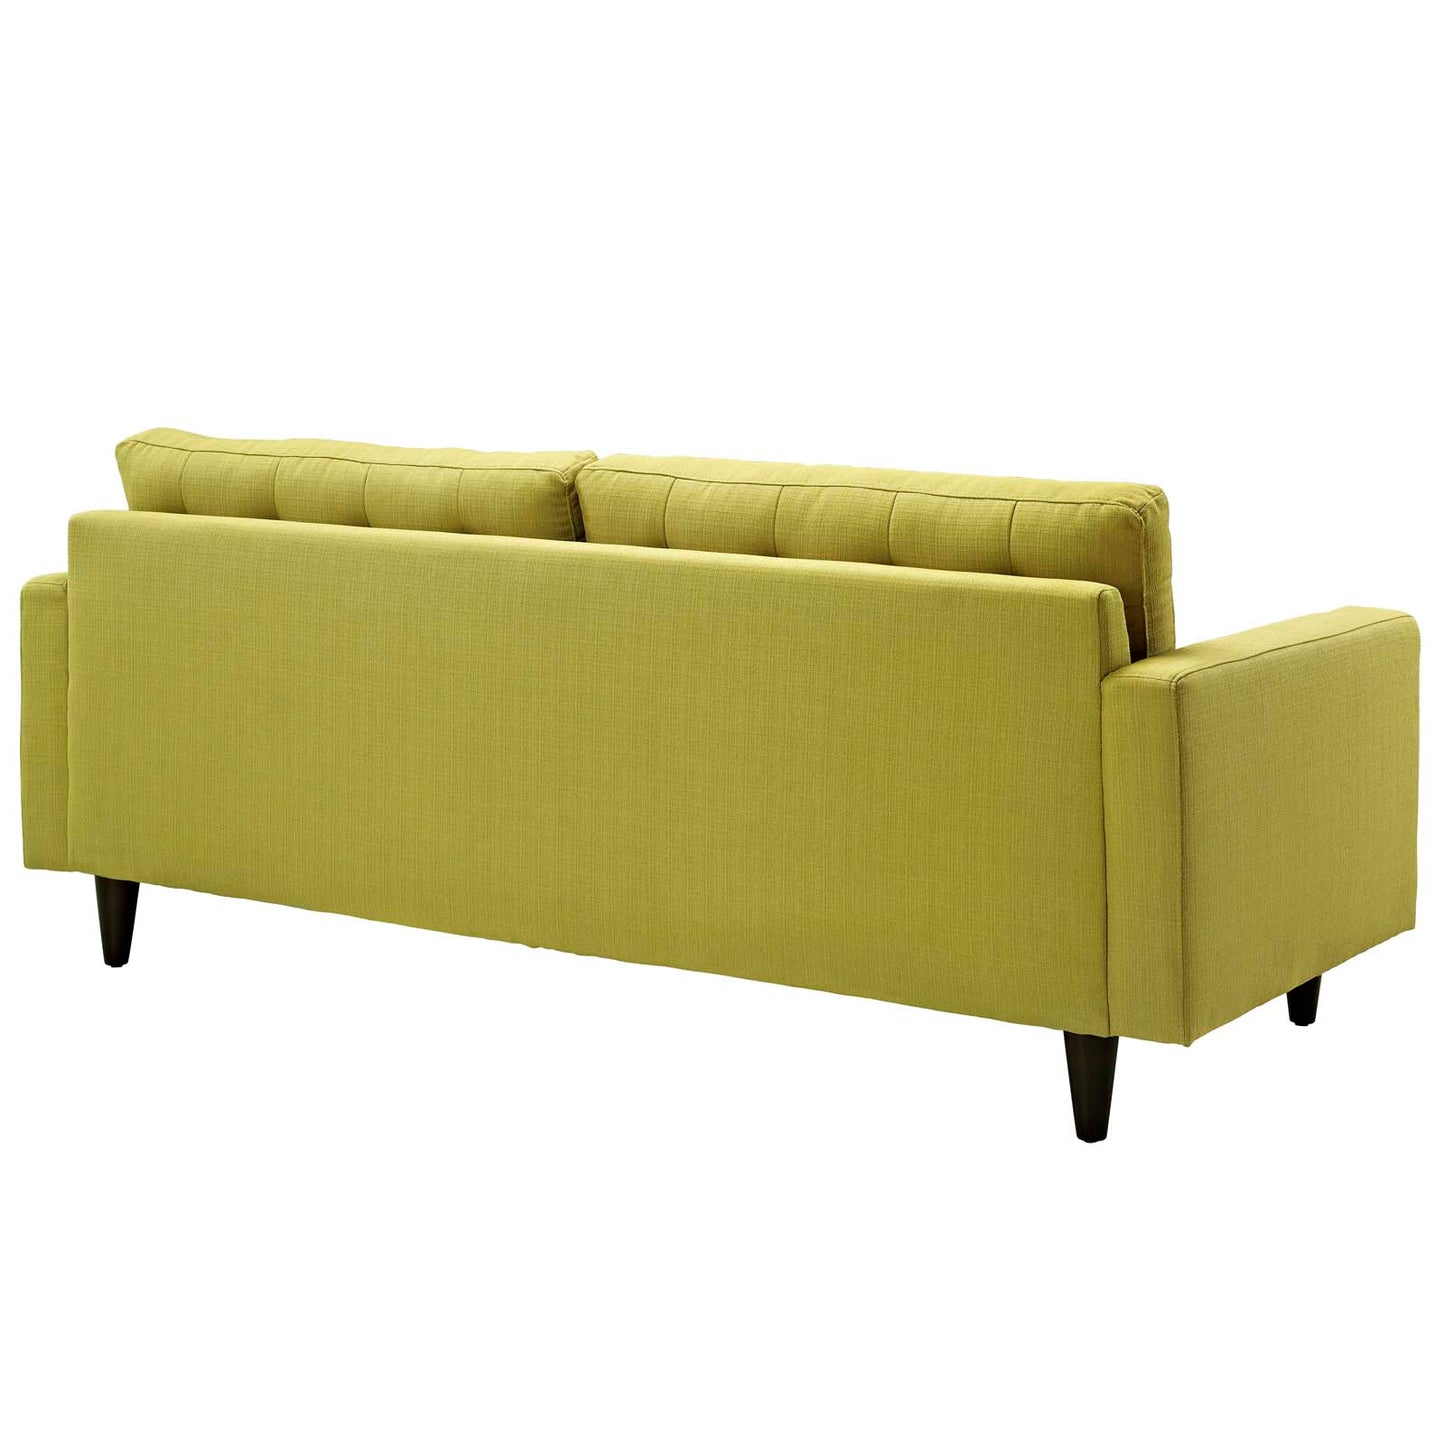 Empress Upholstered Fabric Sofa Wheatgrass EEI-1011-WHE